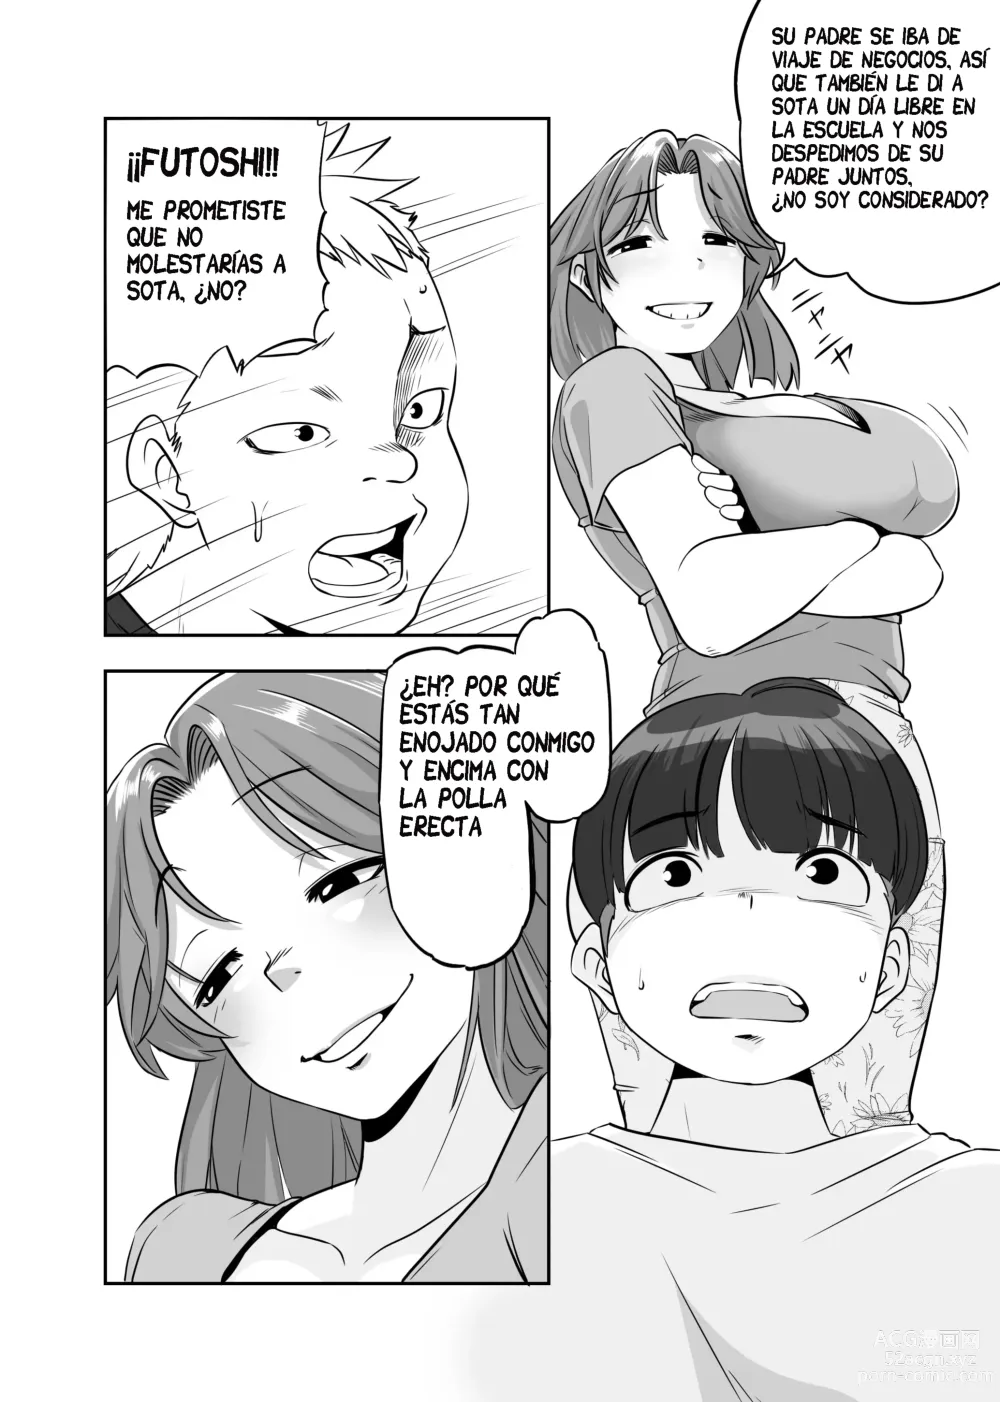 Page 10 of doujinshi Ese chico que odia ser mamá